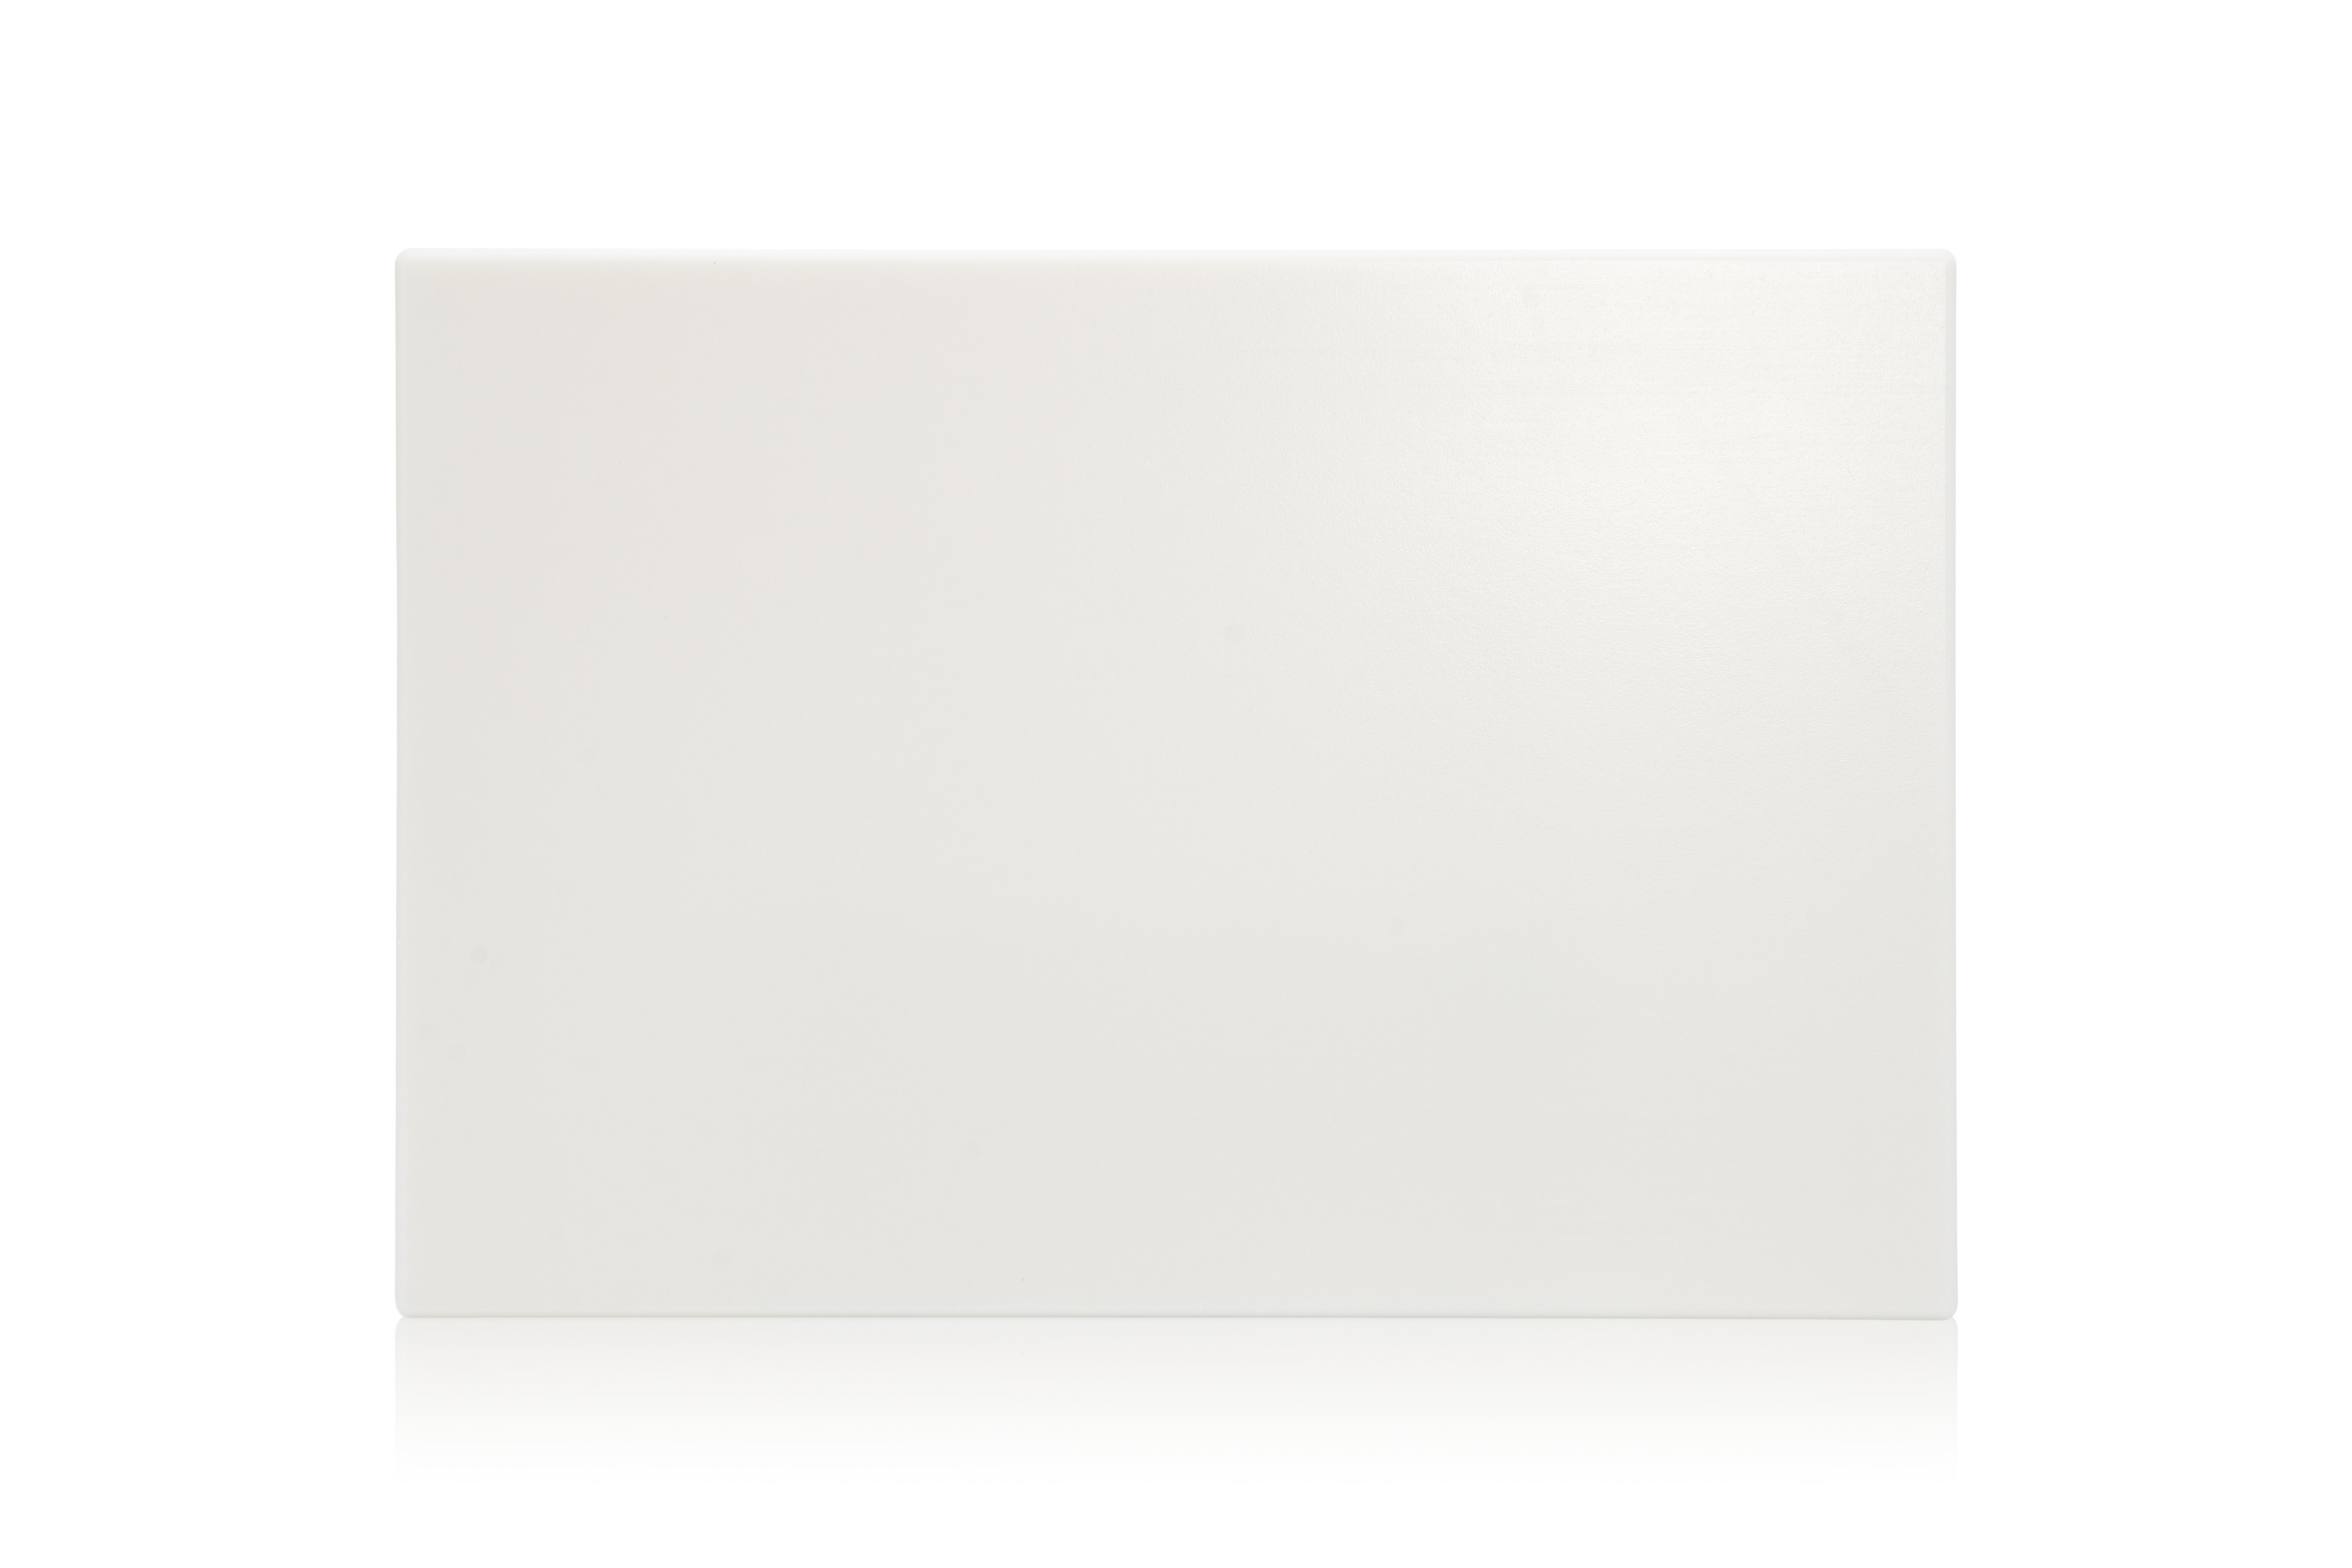 ECatering Chopping Board Single (44 x 30 x 1cm) - 7 Colours